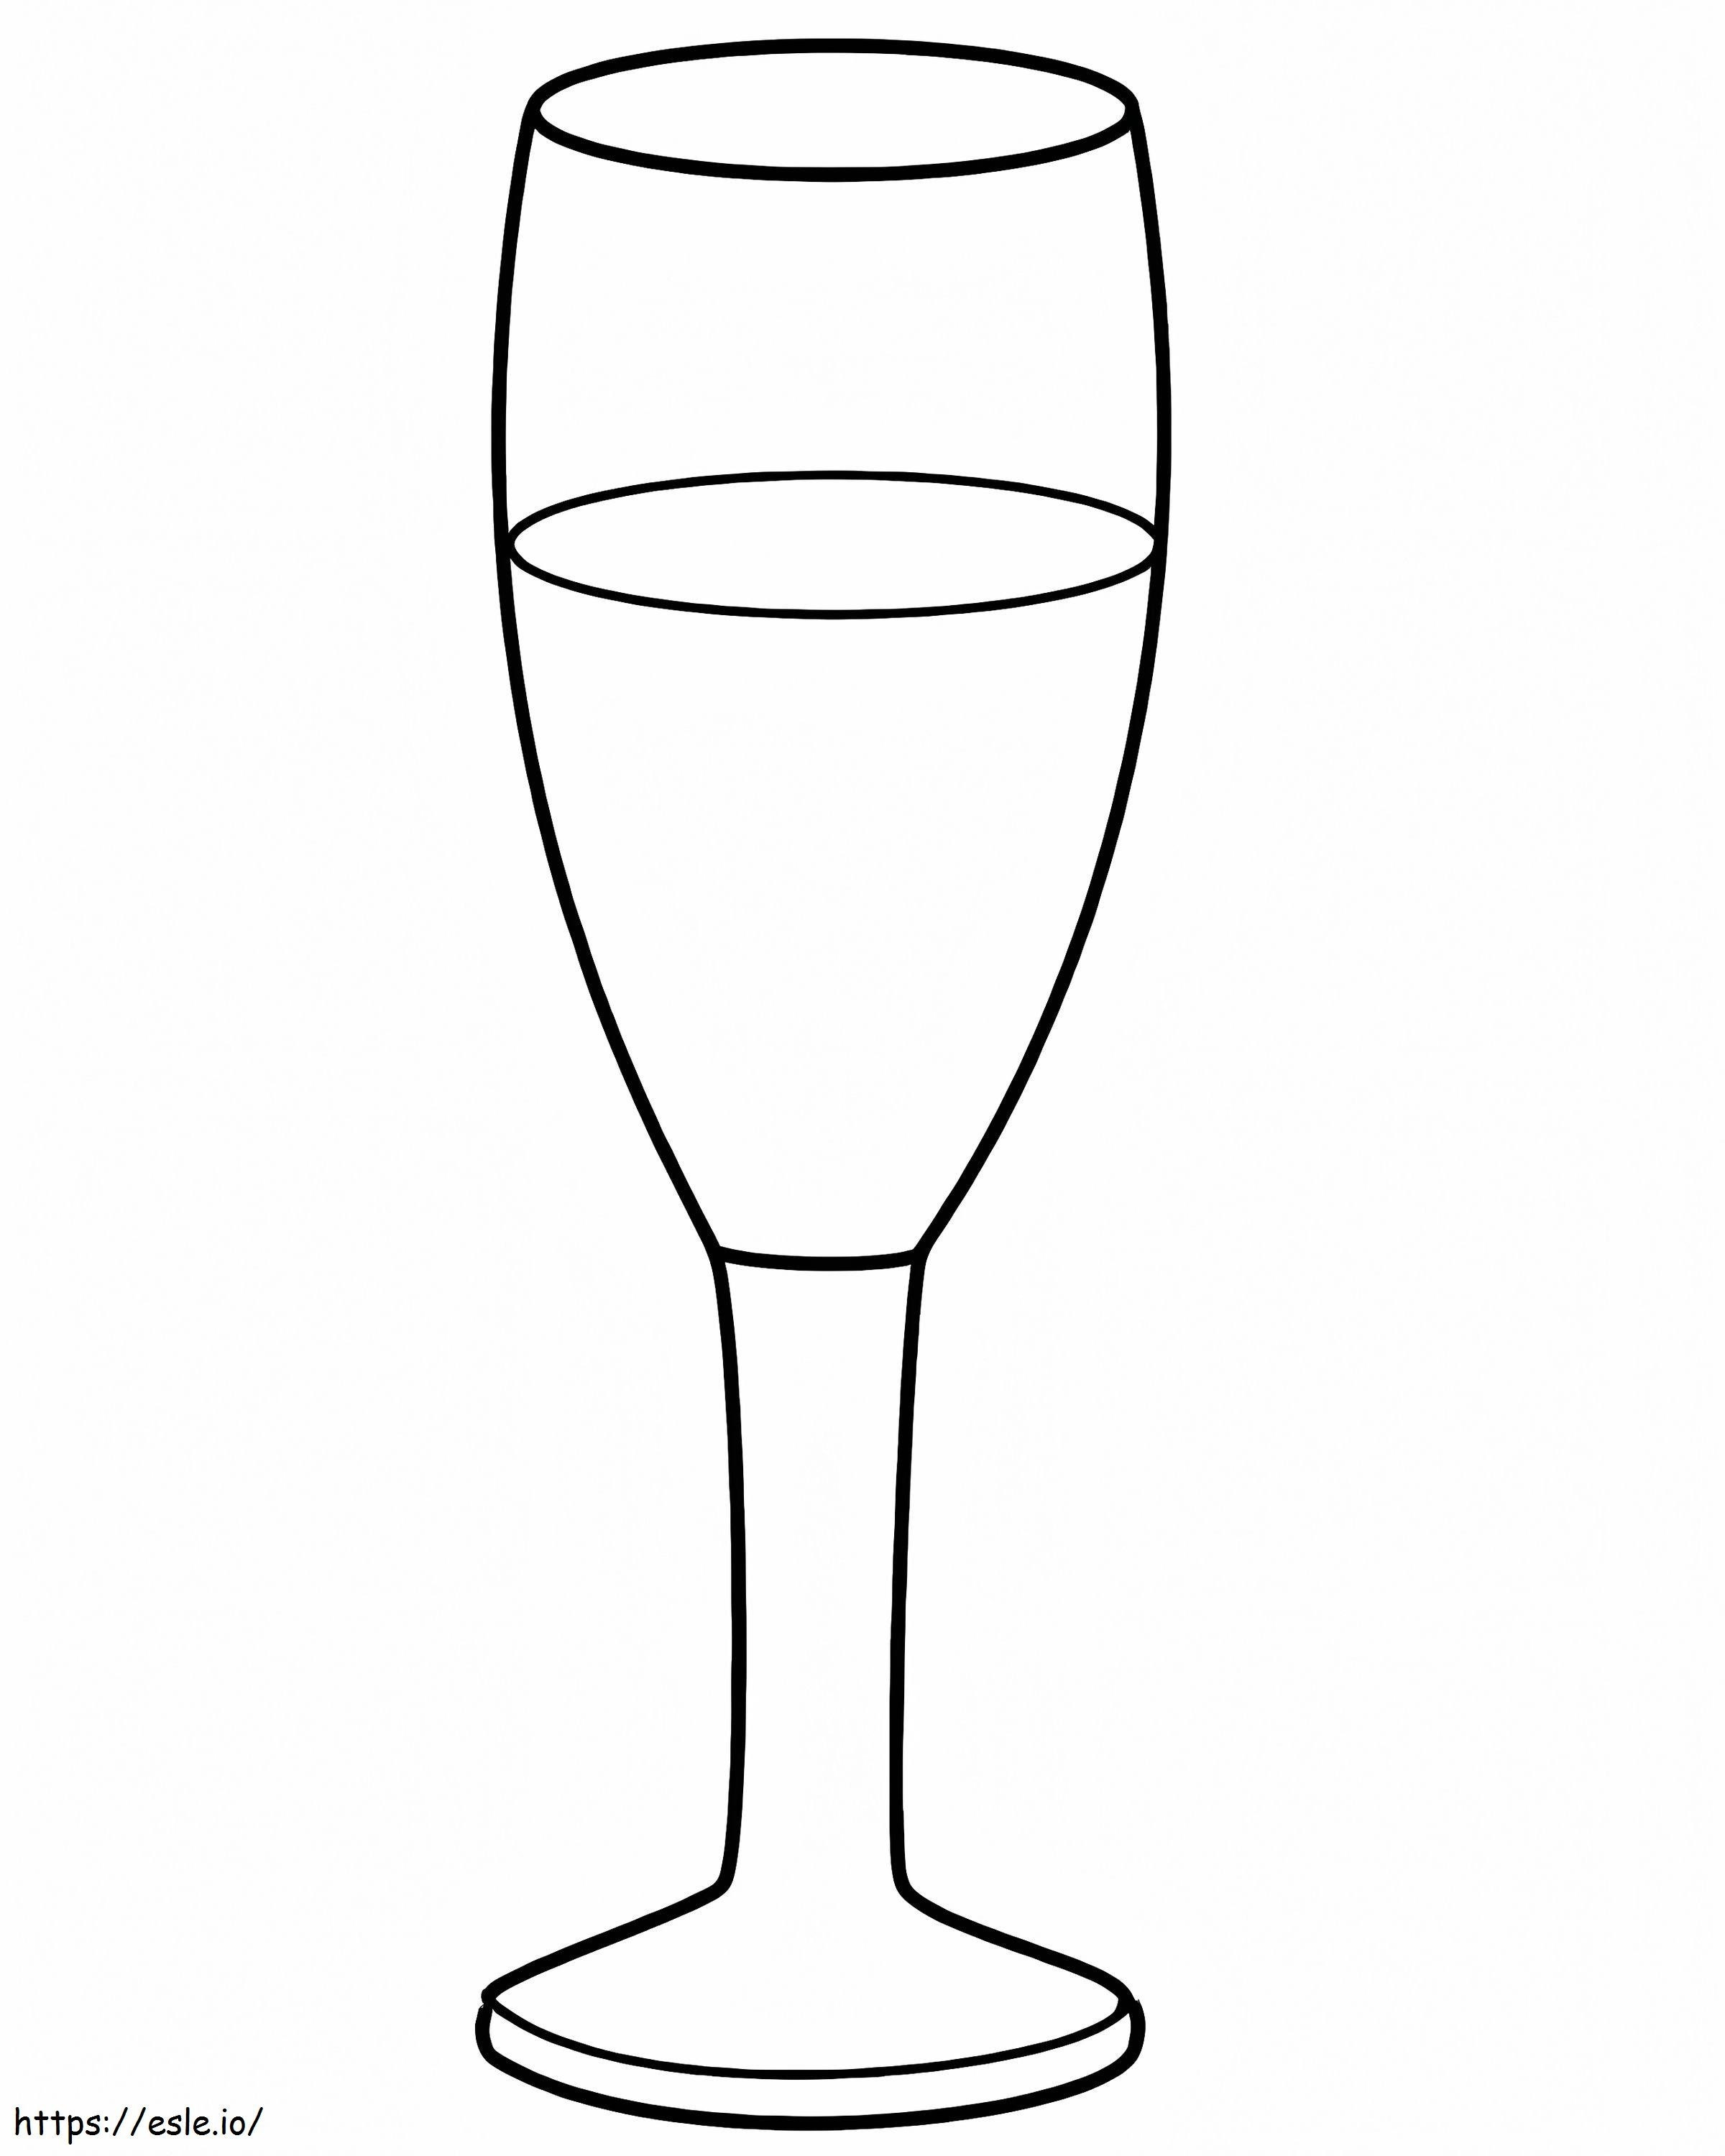 Copa de szampana kolorowanka